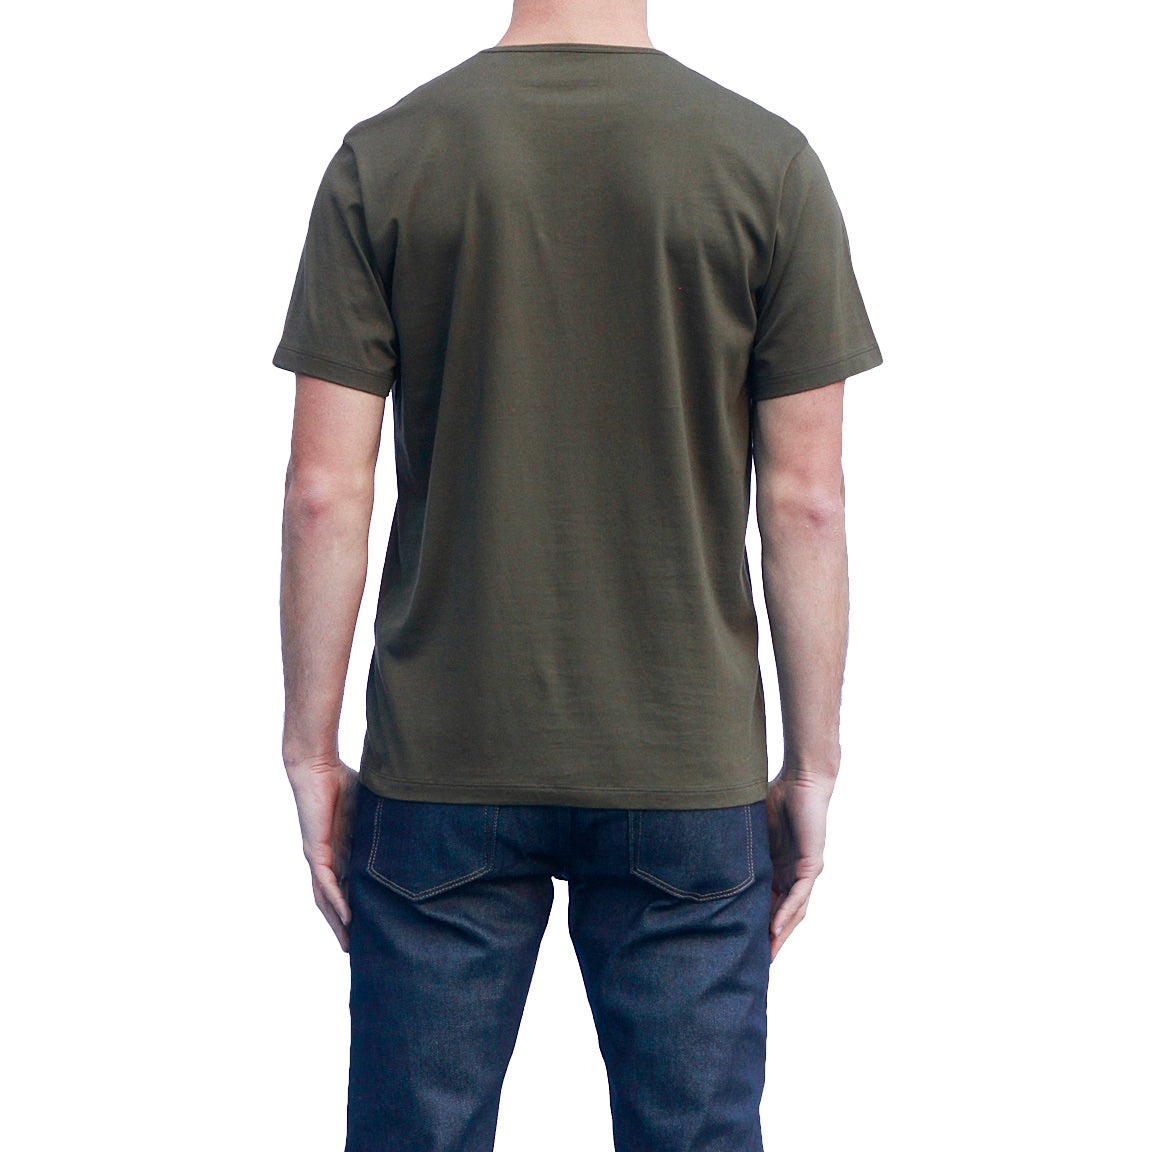 CafePress Amazing Aunt Dark T Shirt 100% Cotton T-Shirt (1275733885)